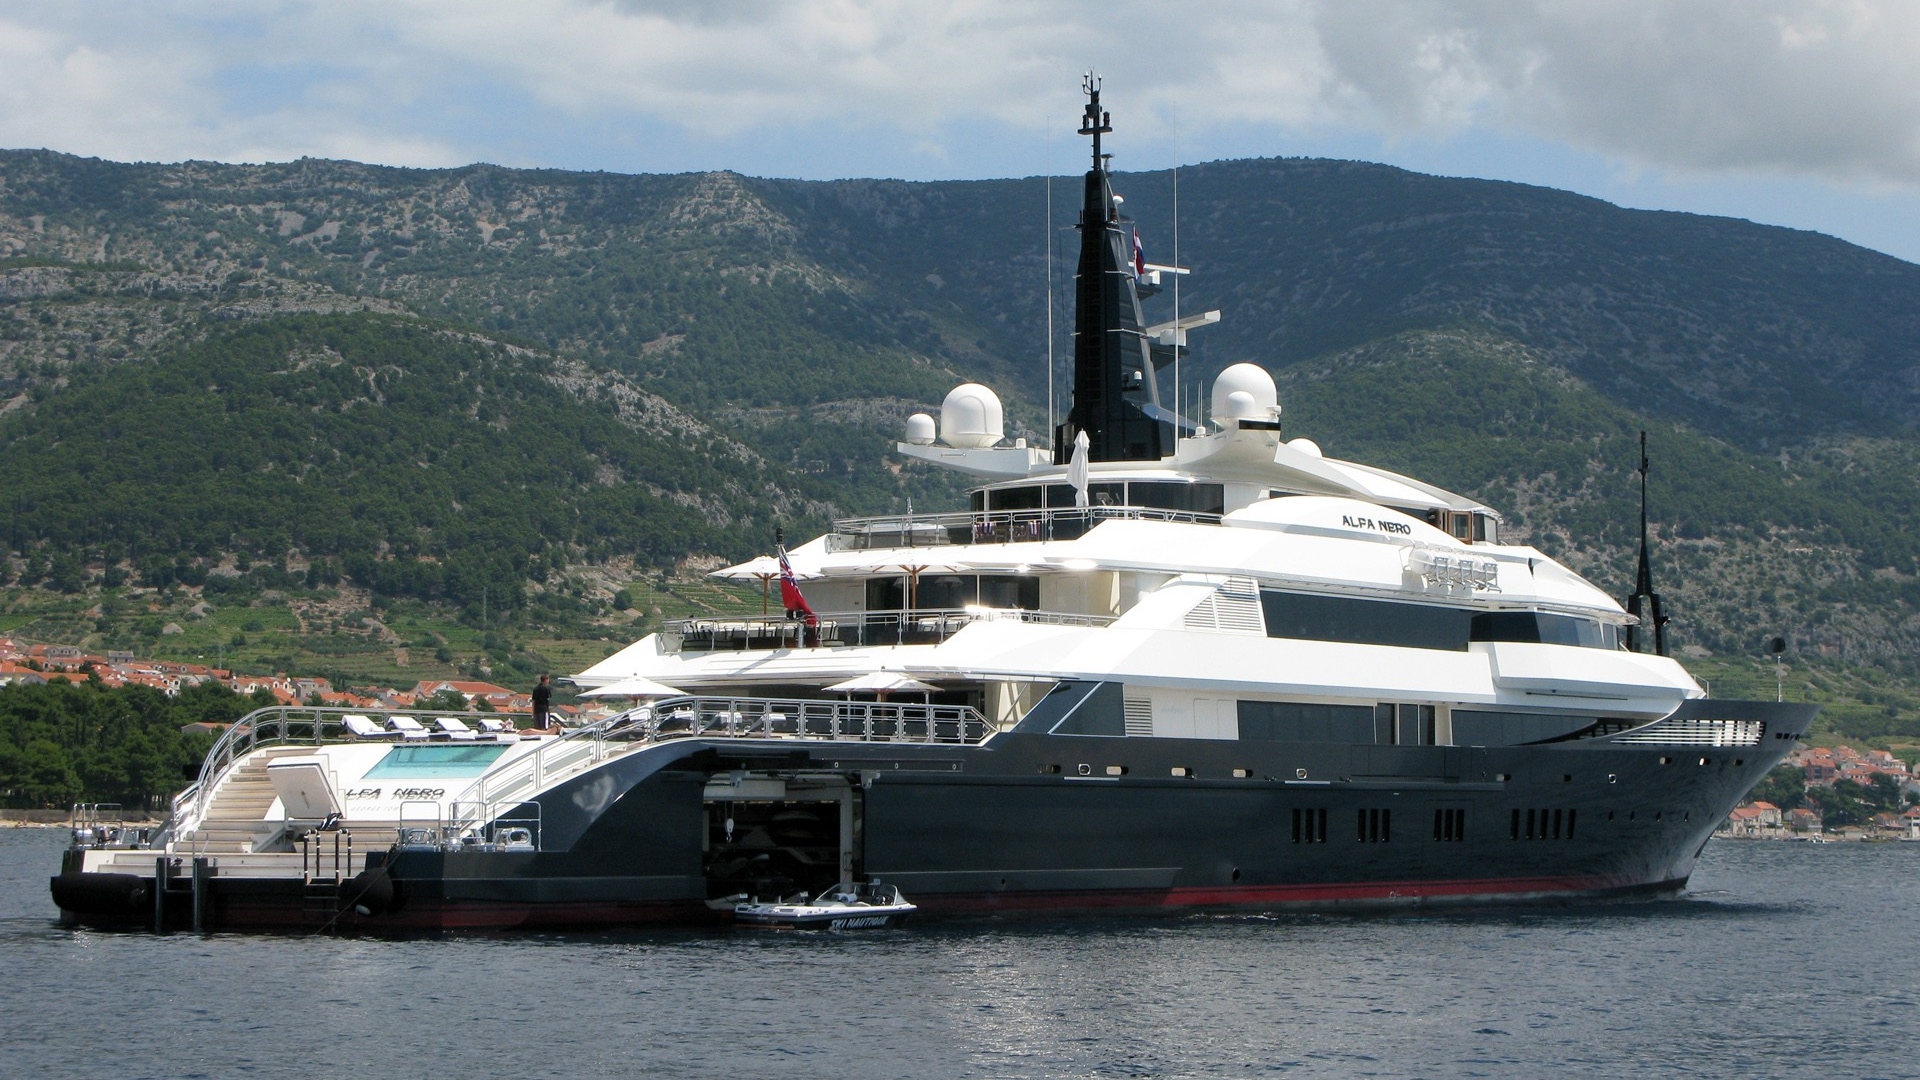 who owns the alfa nero yacht